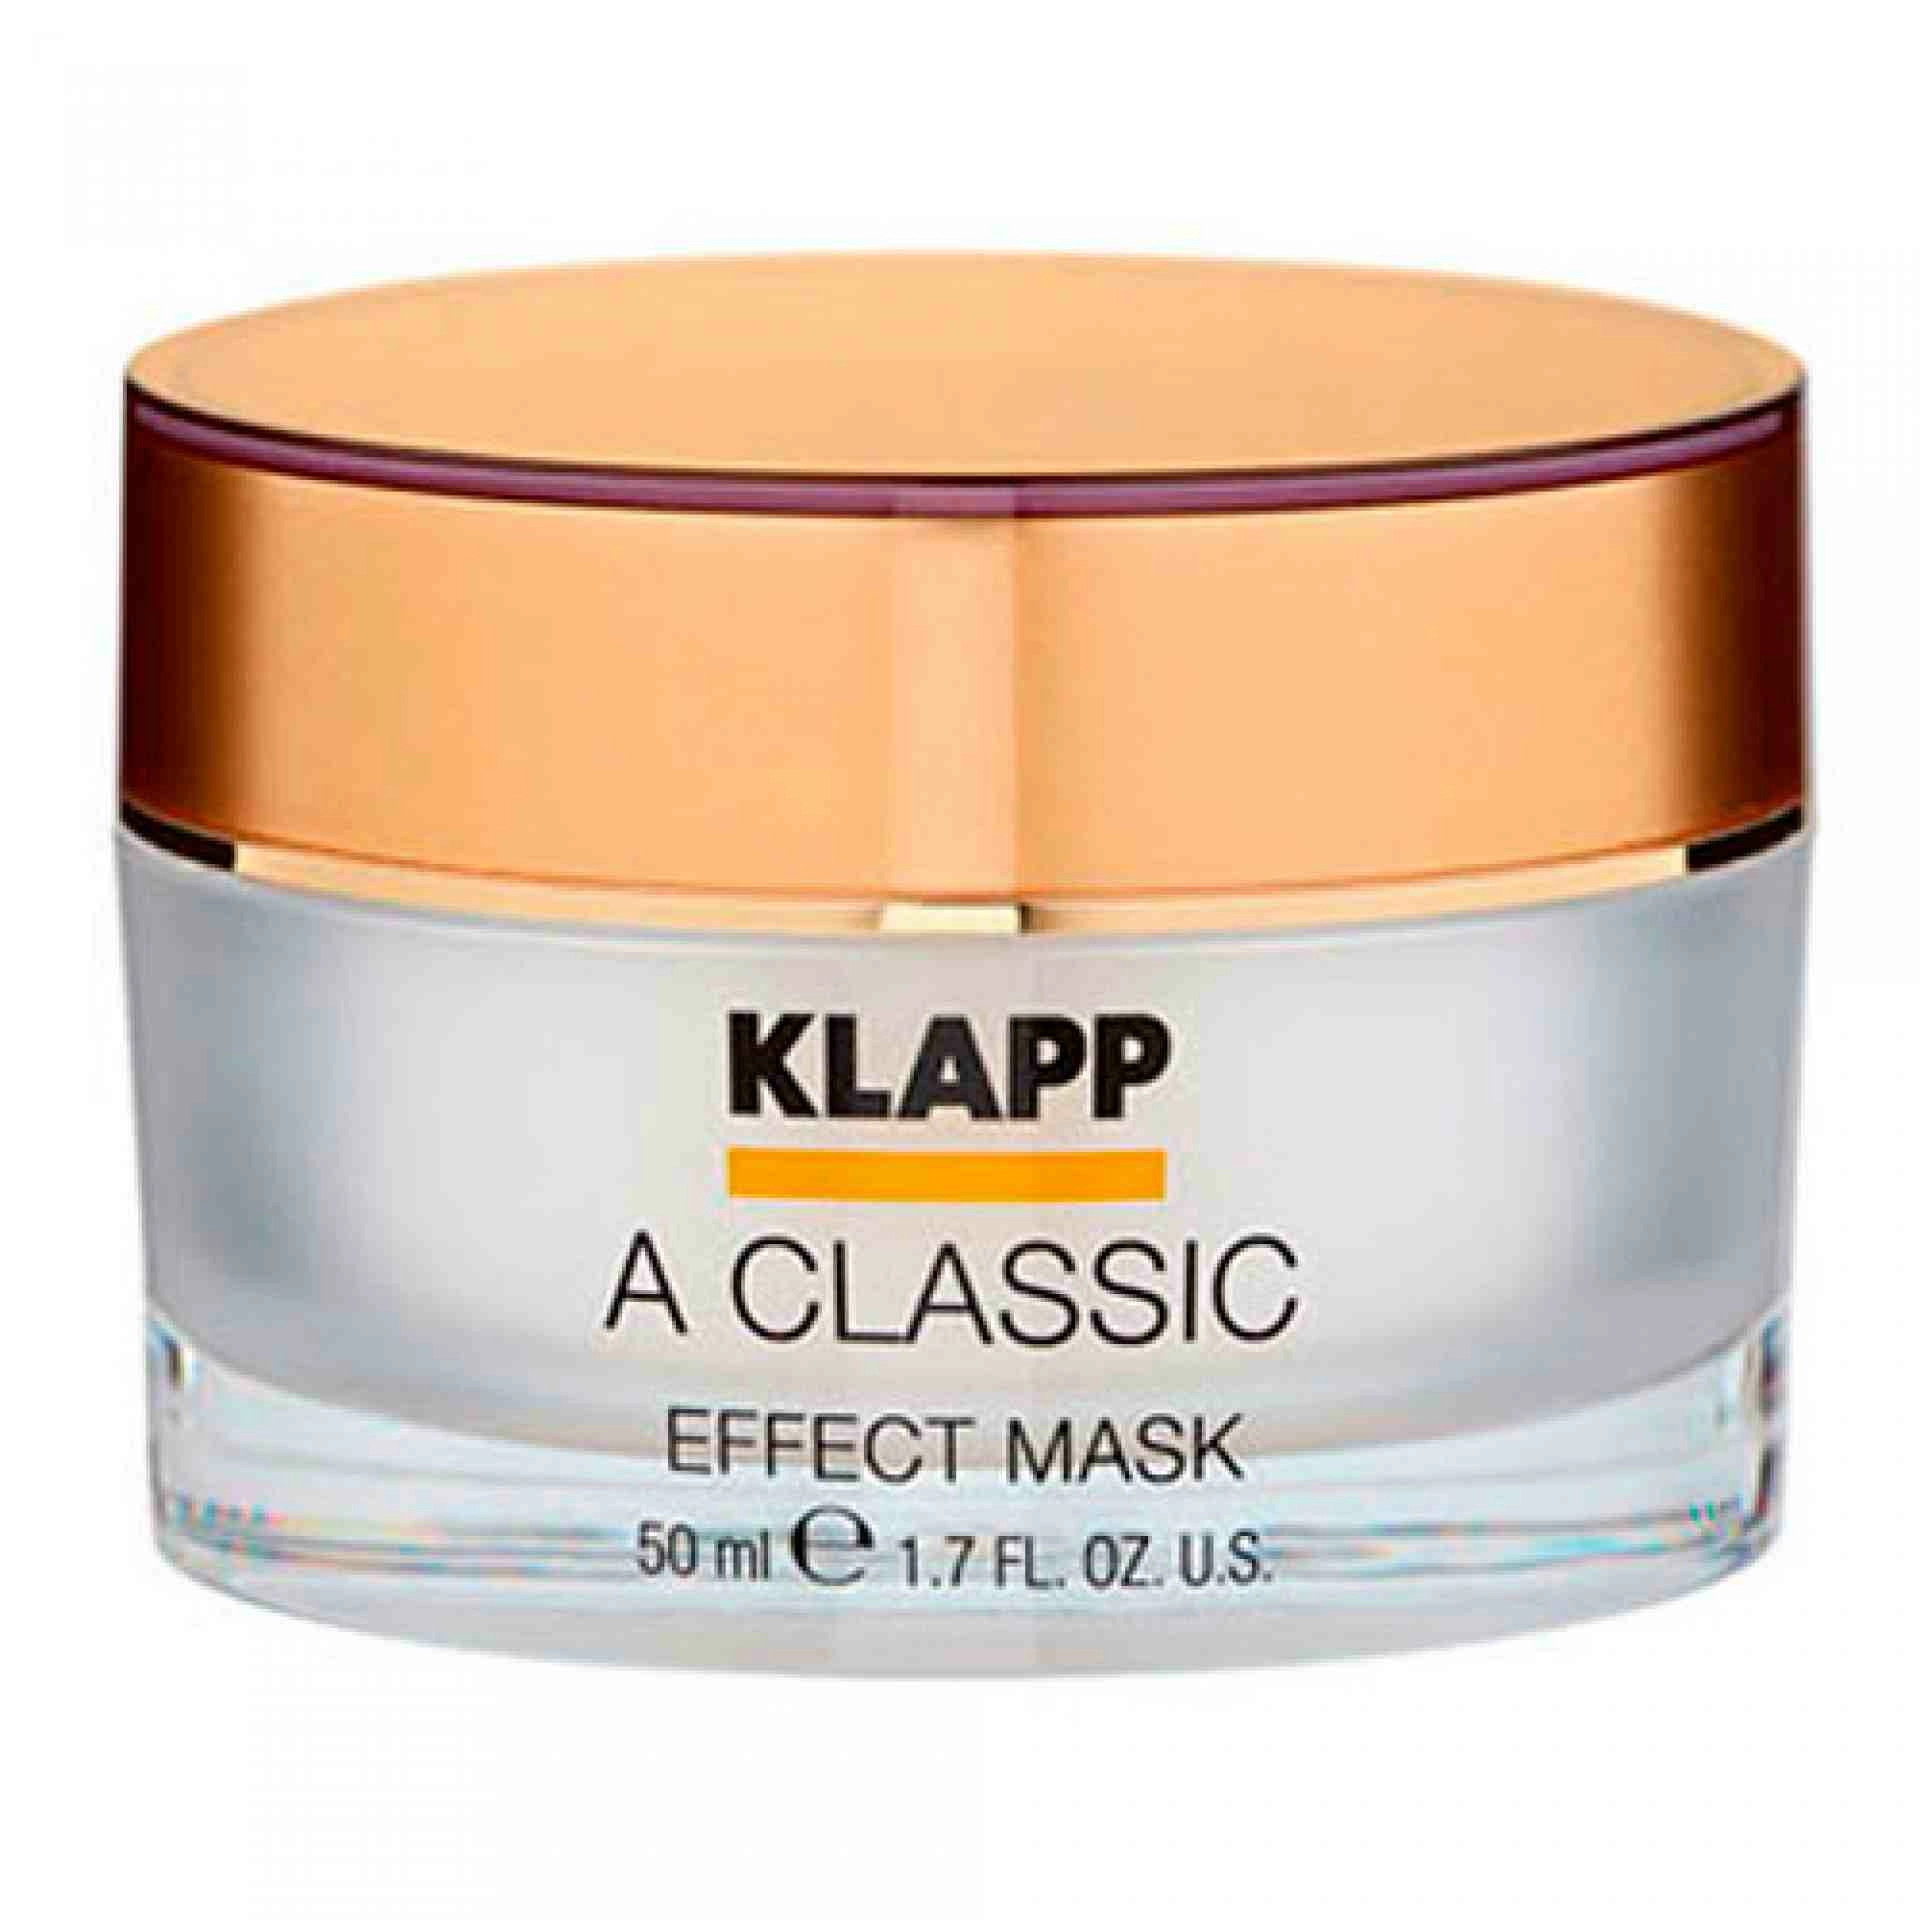 Effect Mask | Mascarilla Hidratante 50ml - A Classic - Klapp ®